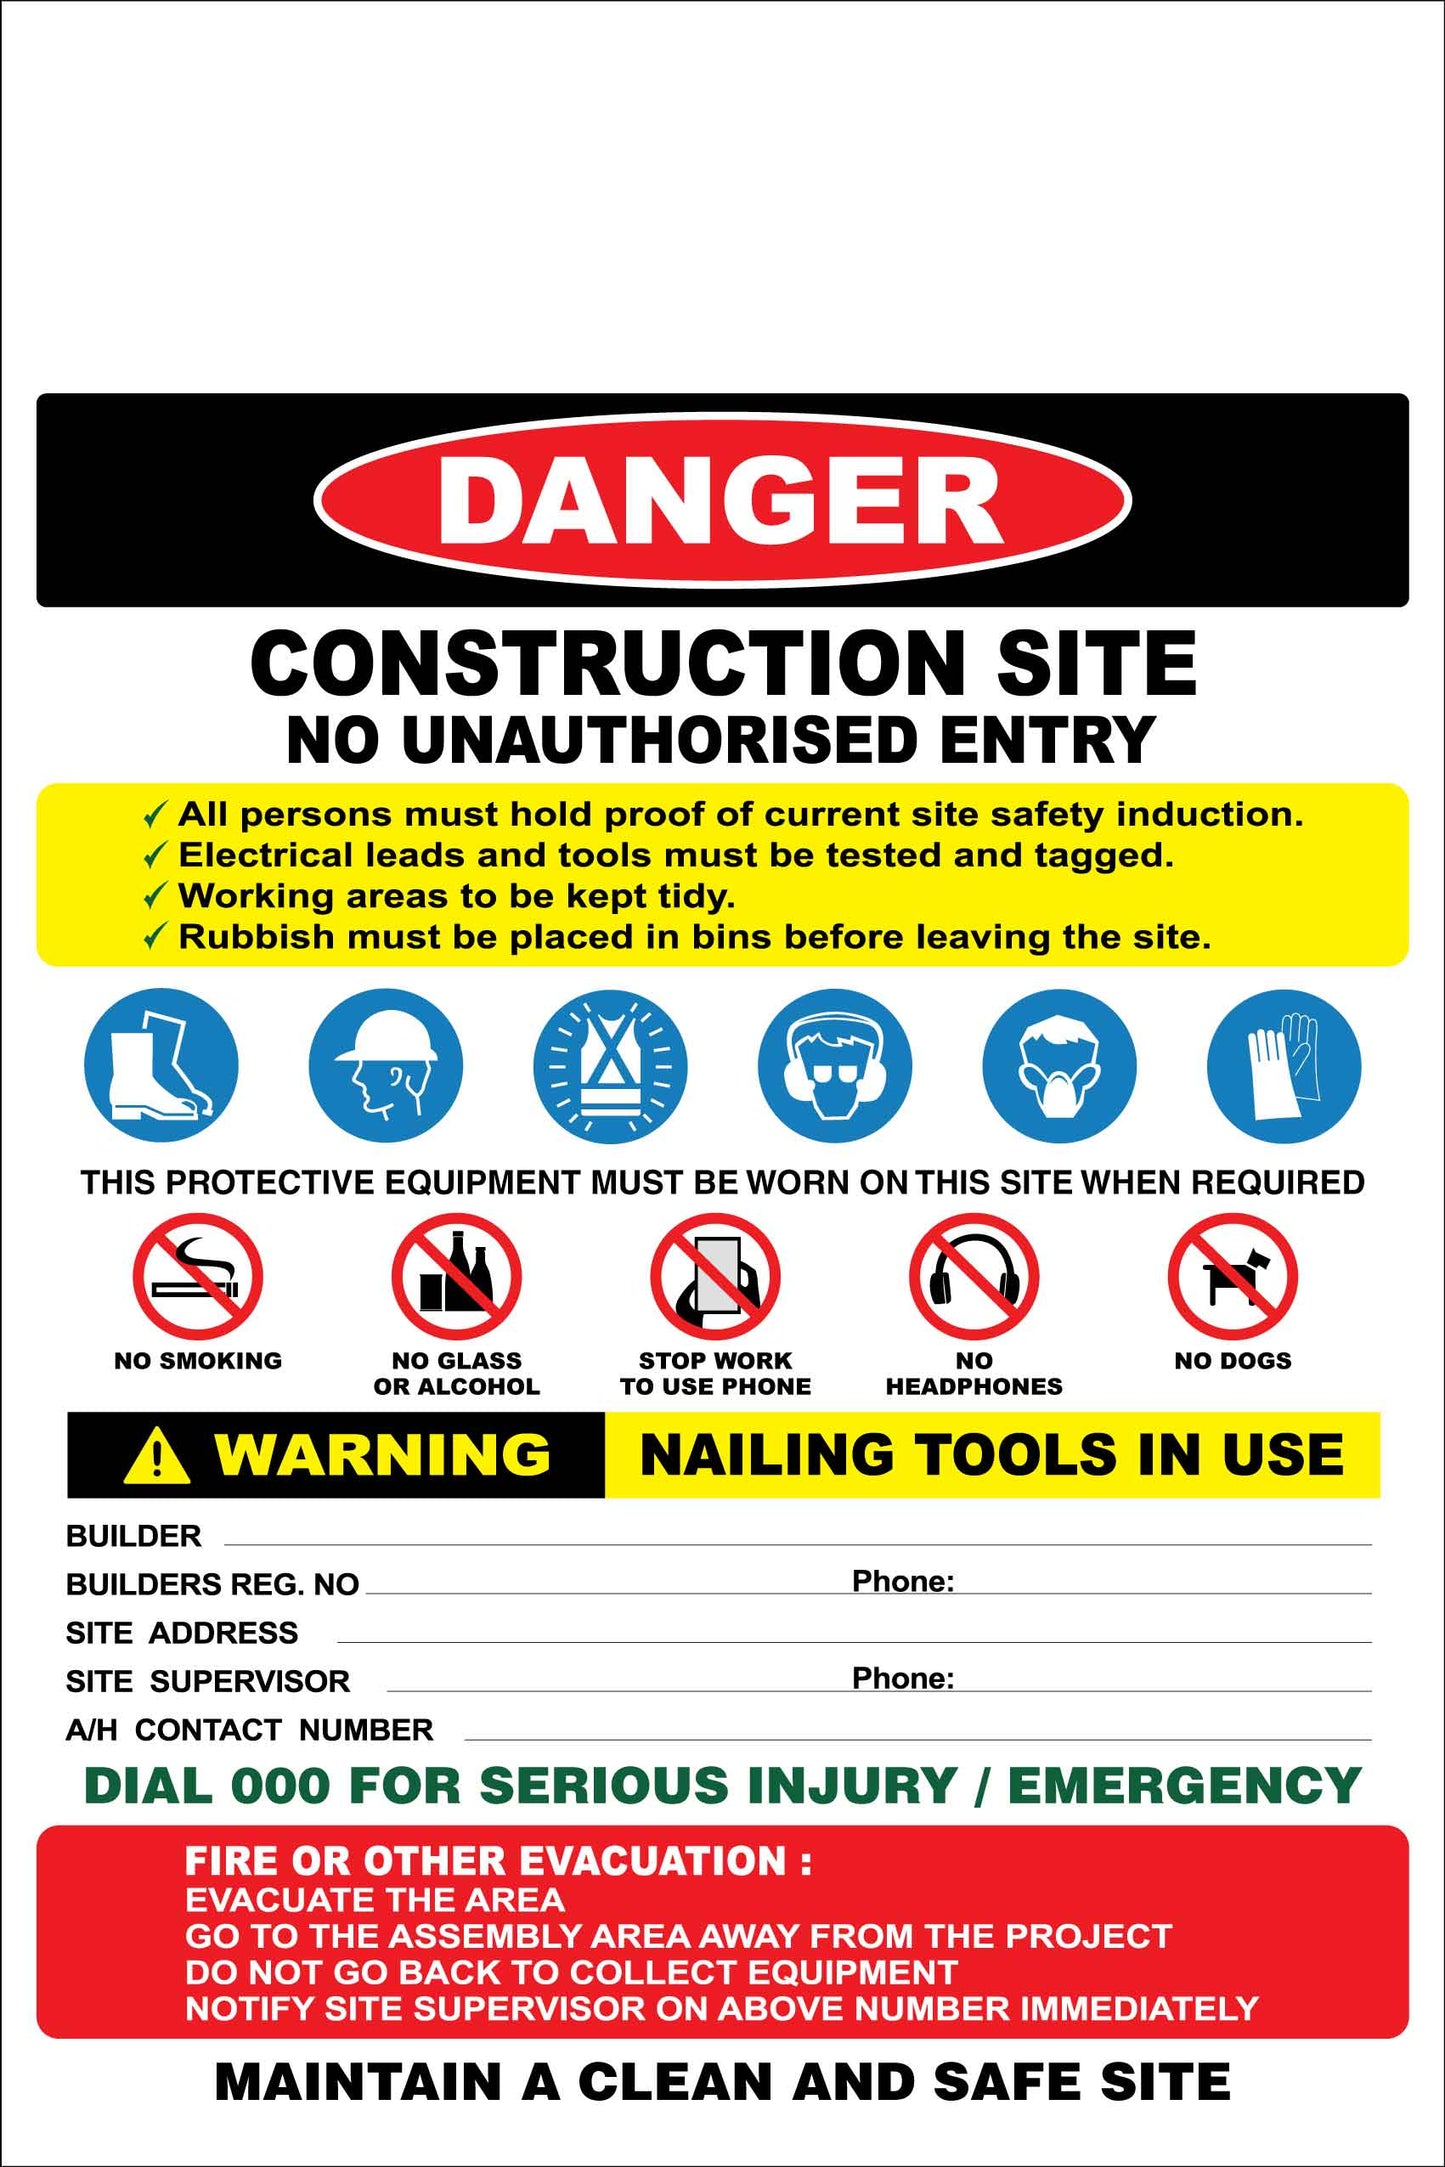 Construction Site Entry Danger Combination Logo Sign